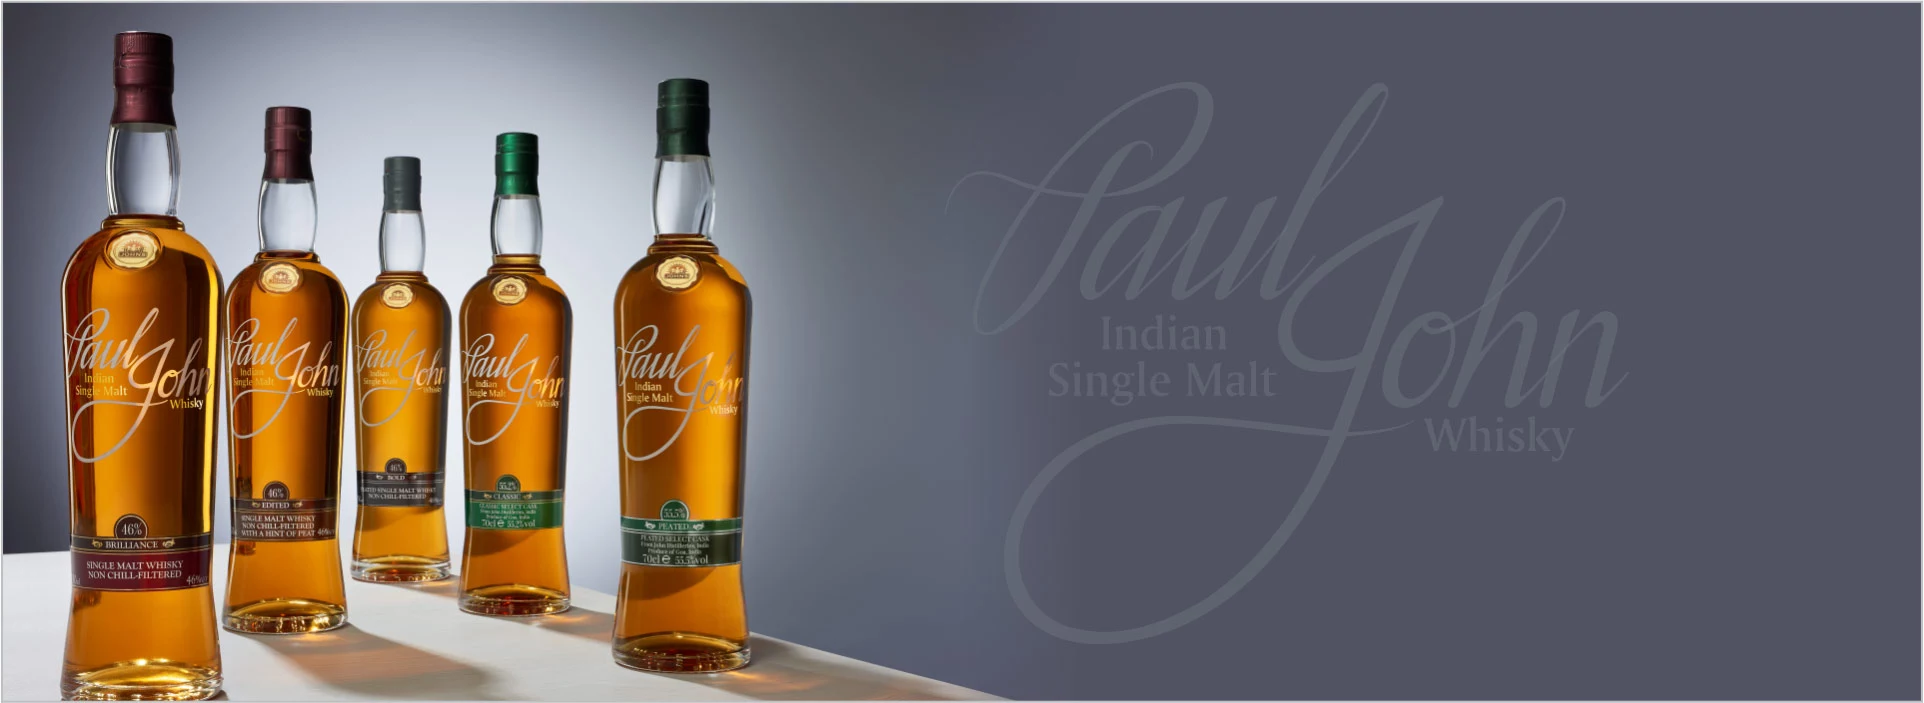 Paul John Single Malt Whisky, Goa, India